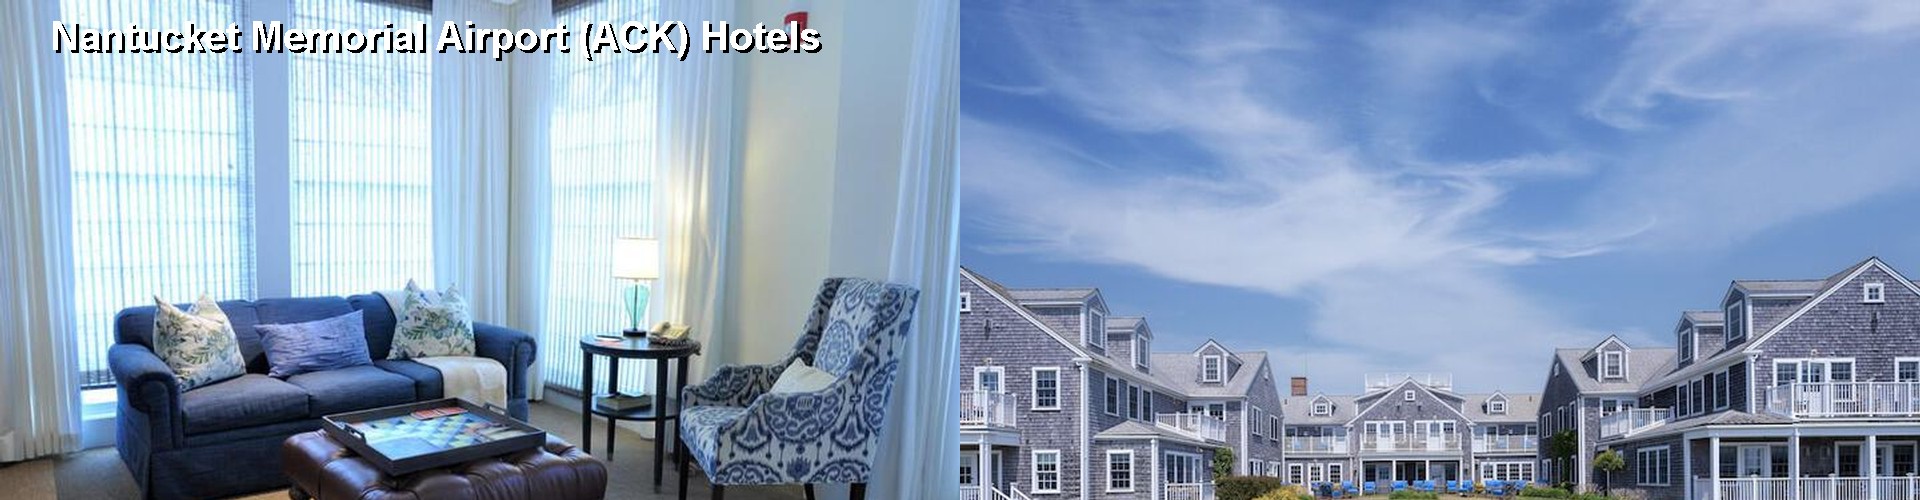 5 Best Hotels near Nantucket Memorial Airport (ACK)